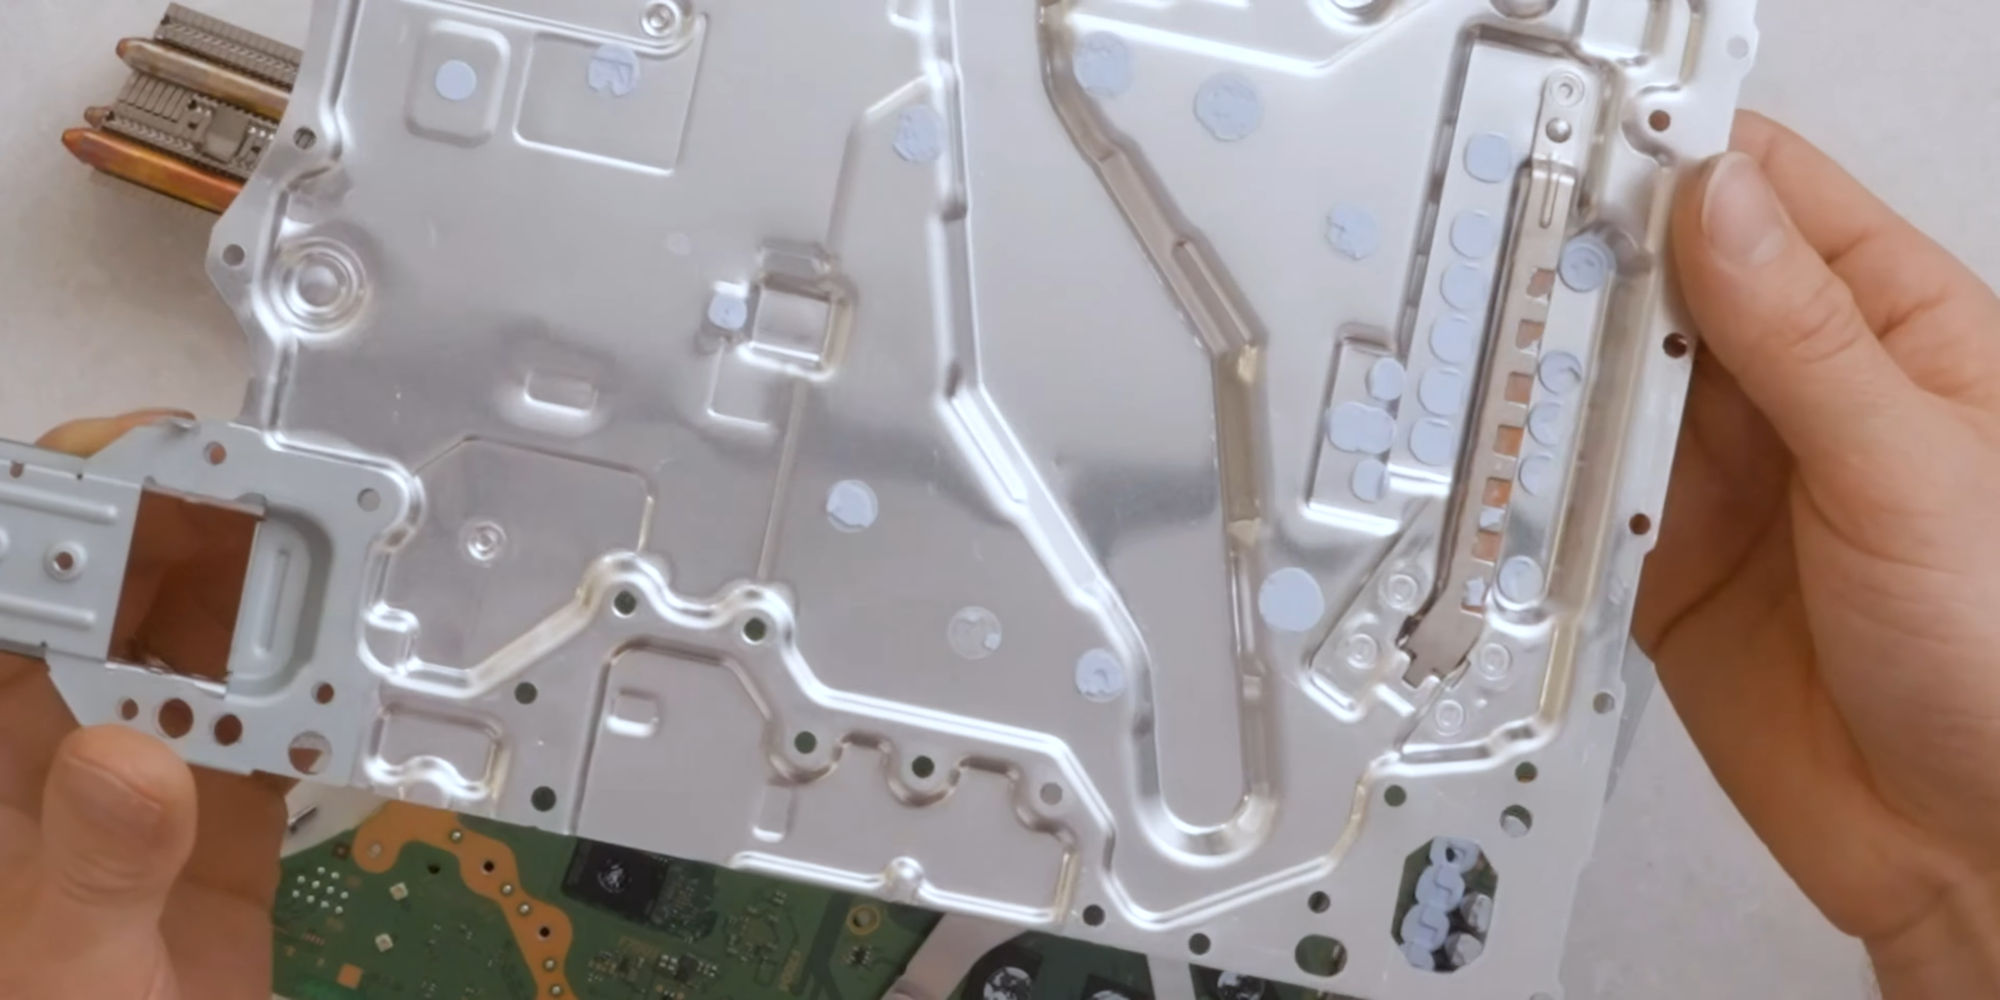 PS5 Slim Teardown Reveals Same 6nm Processor, Cooling Upgrades